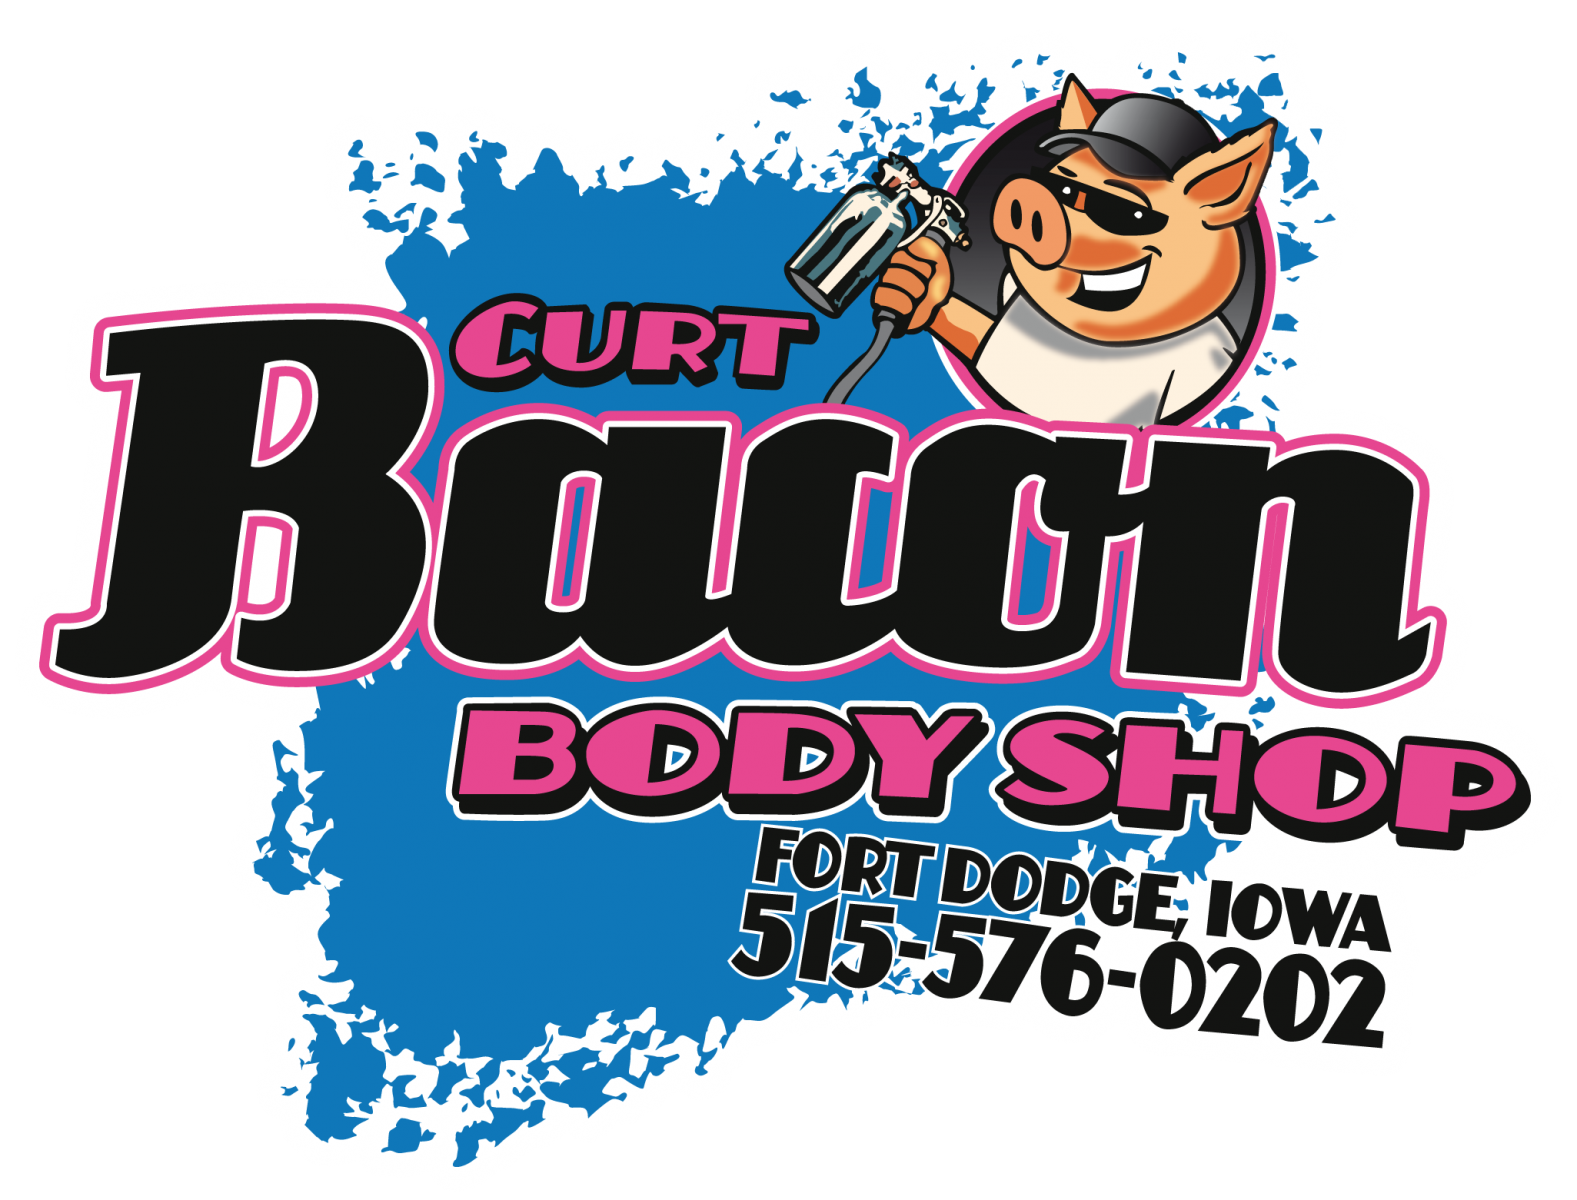 Curt Bacon Body Shop's Image